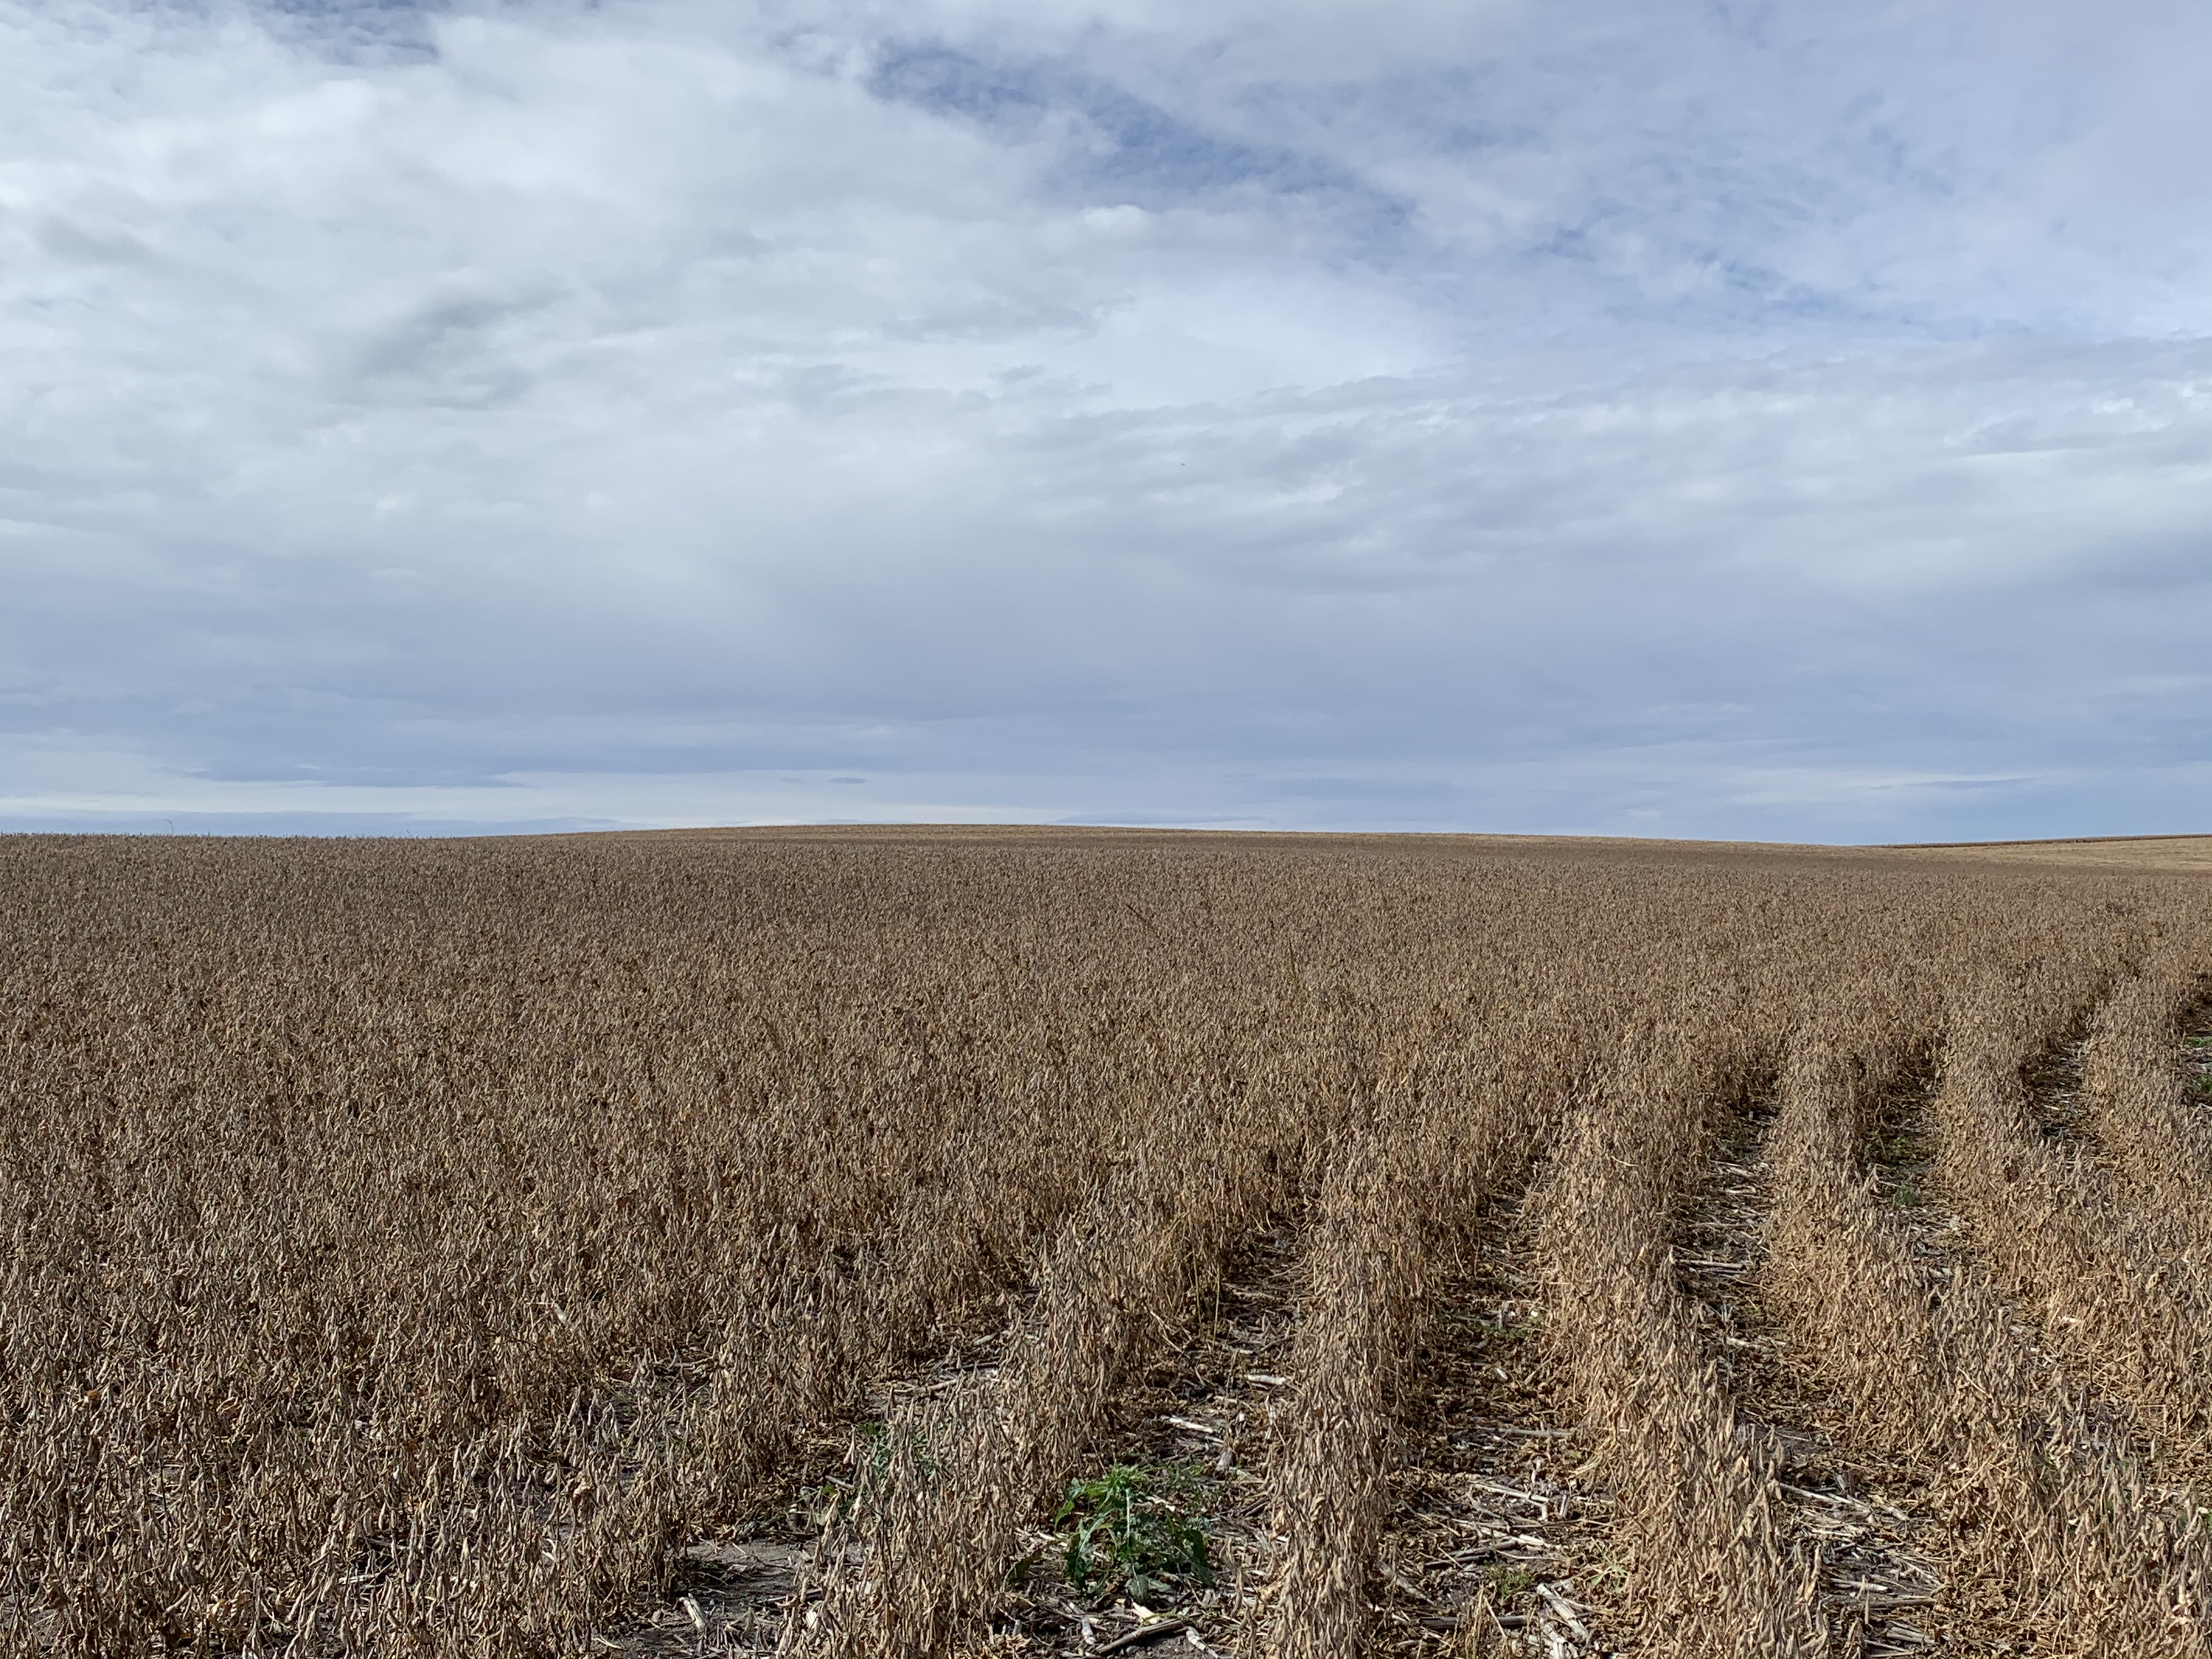 Kulm, North Dakota farmer to serve as treasurer of the American Soybean Association